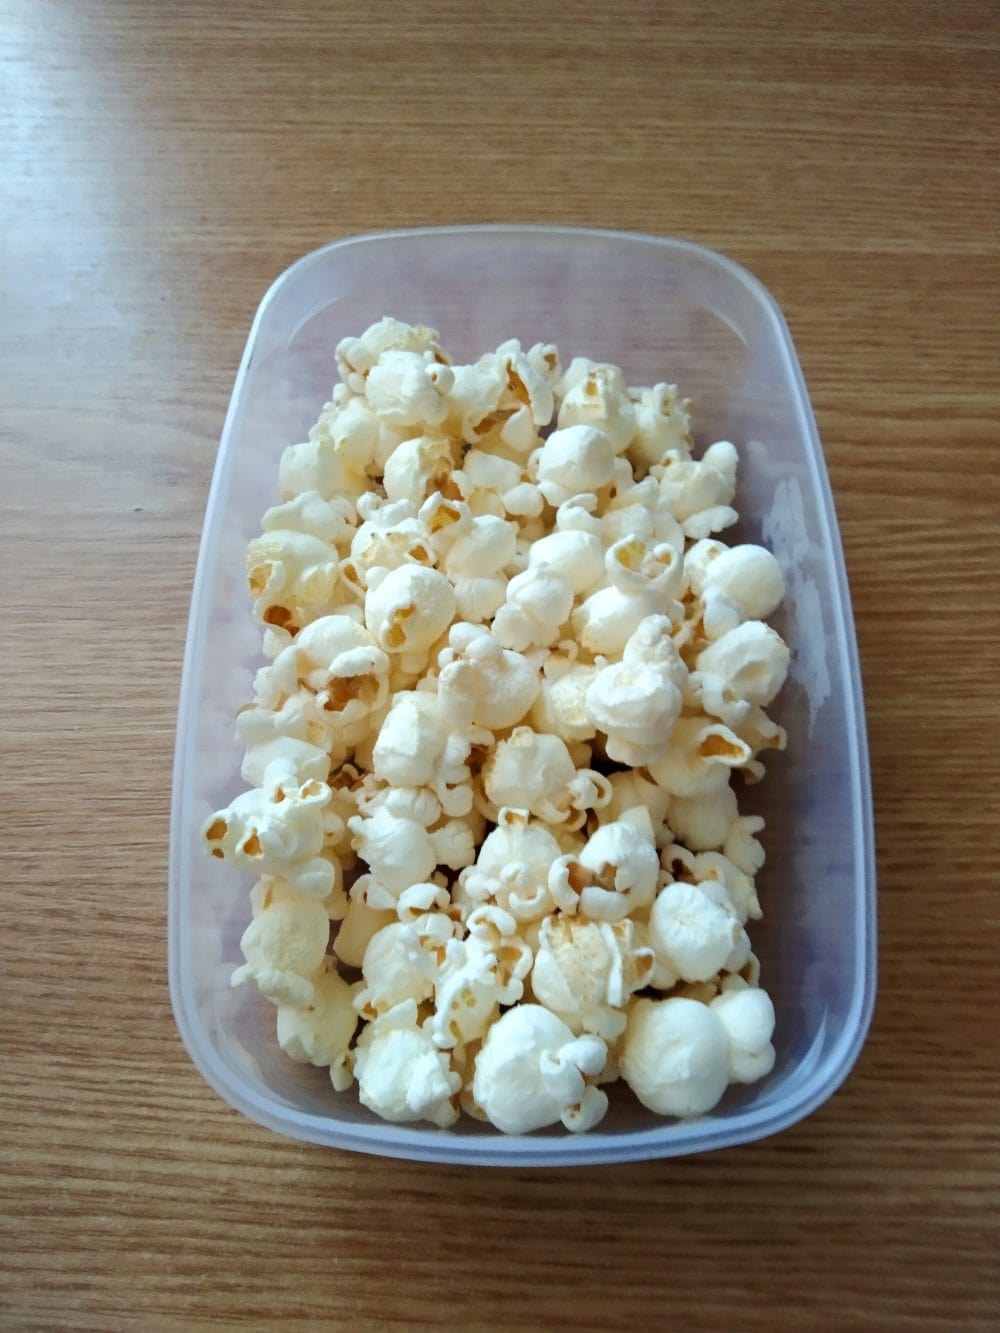 popcorn bowl on table